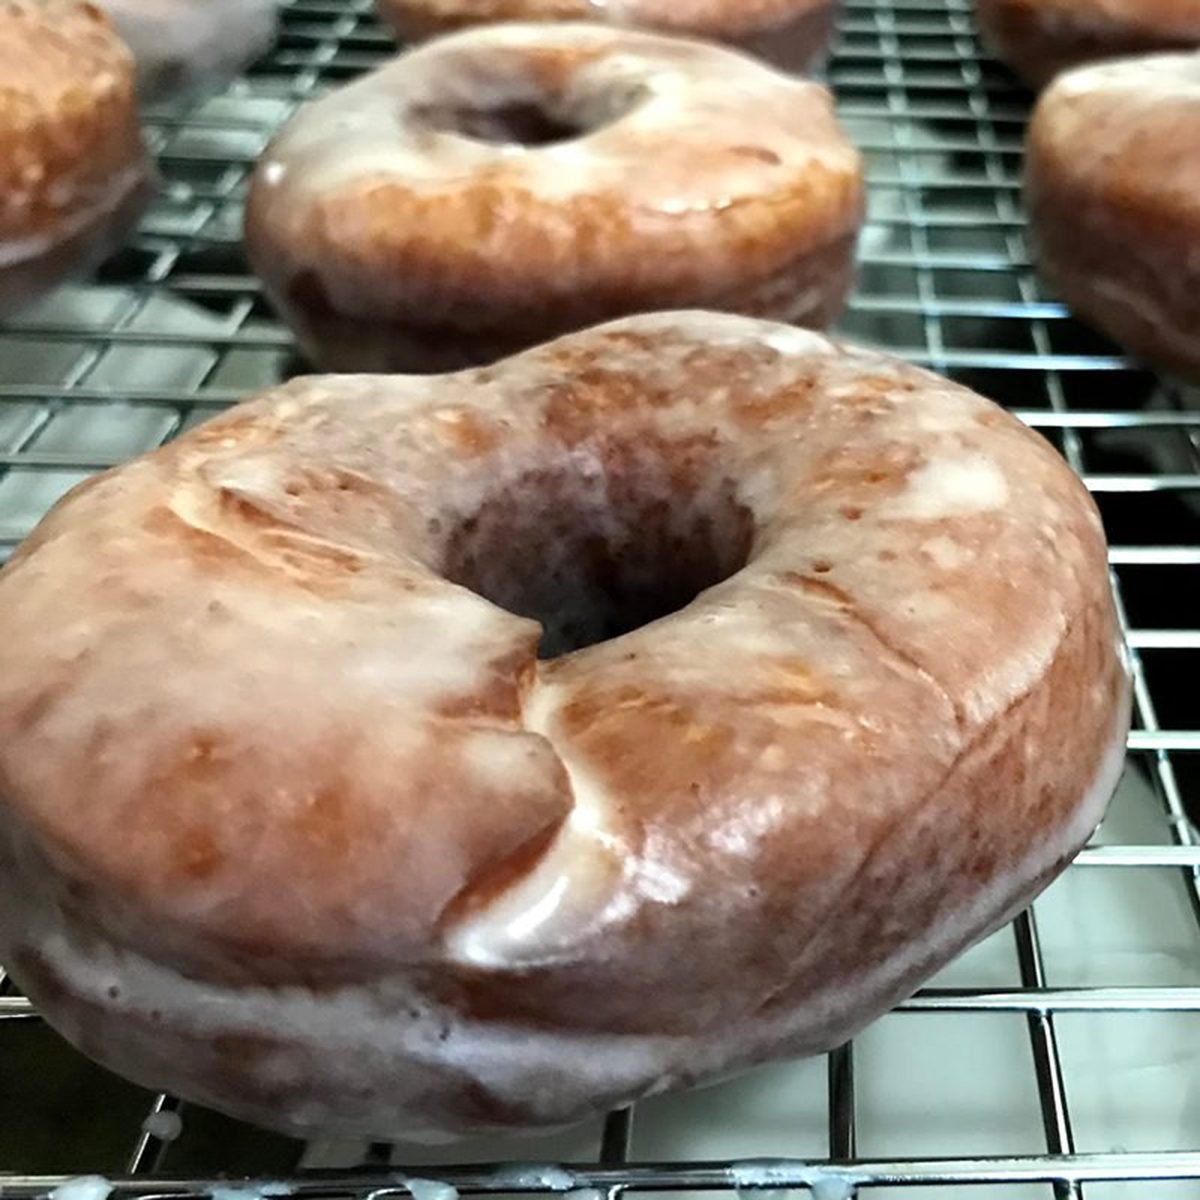 Glazed donuts on a rack